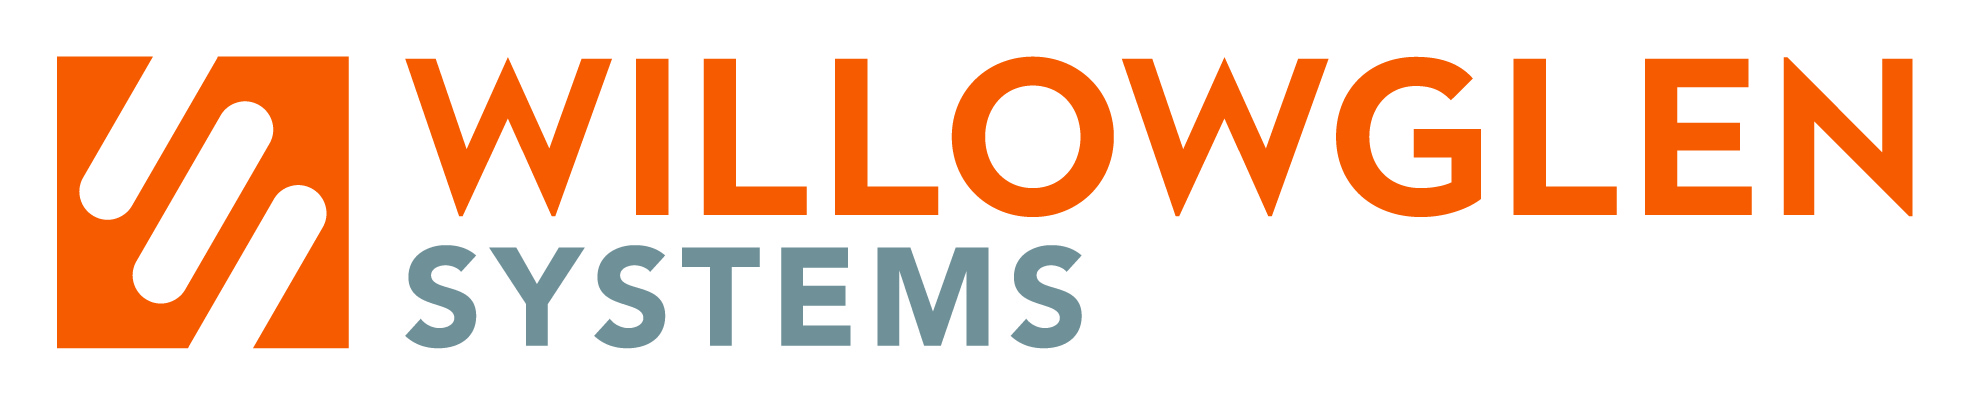 Willowglen Systems